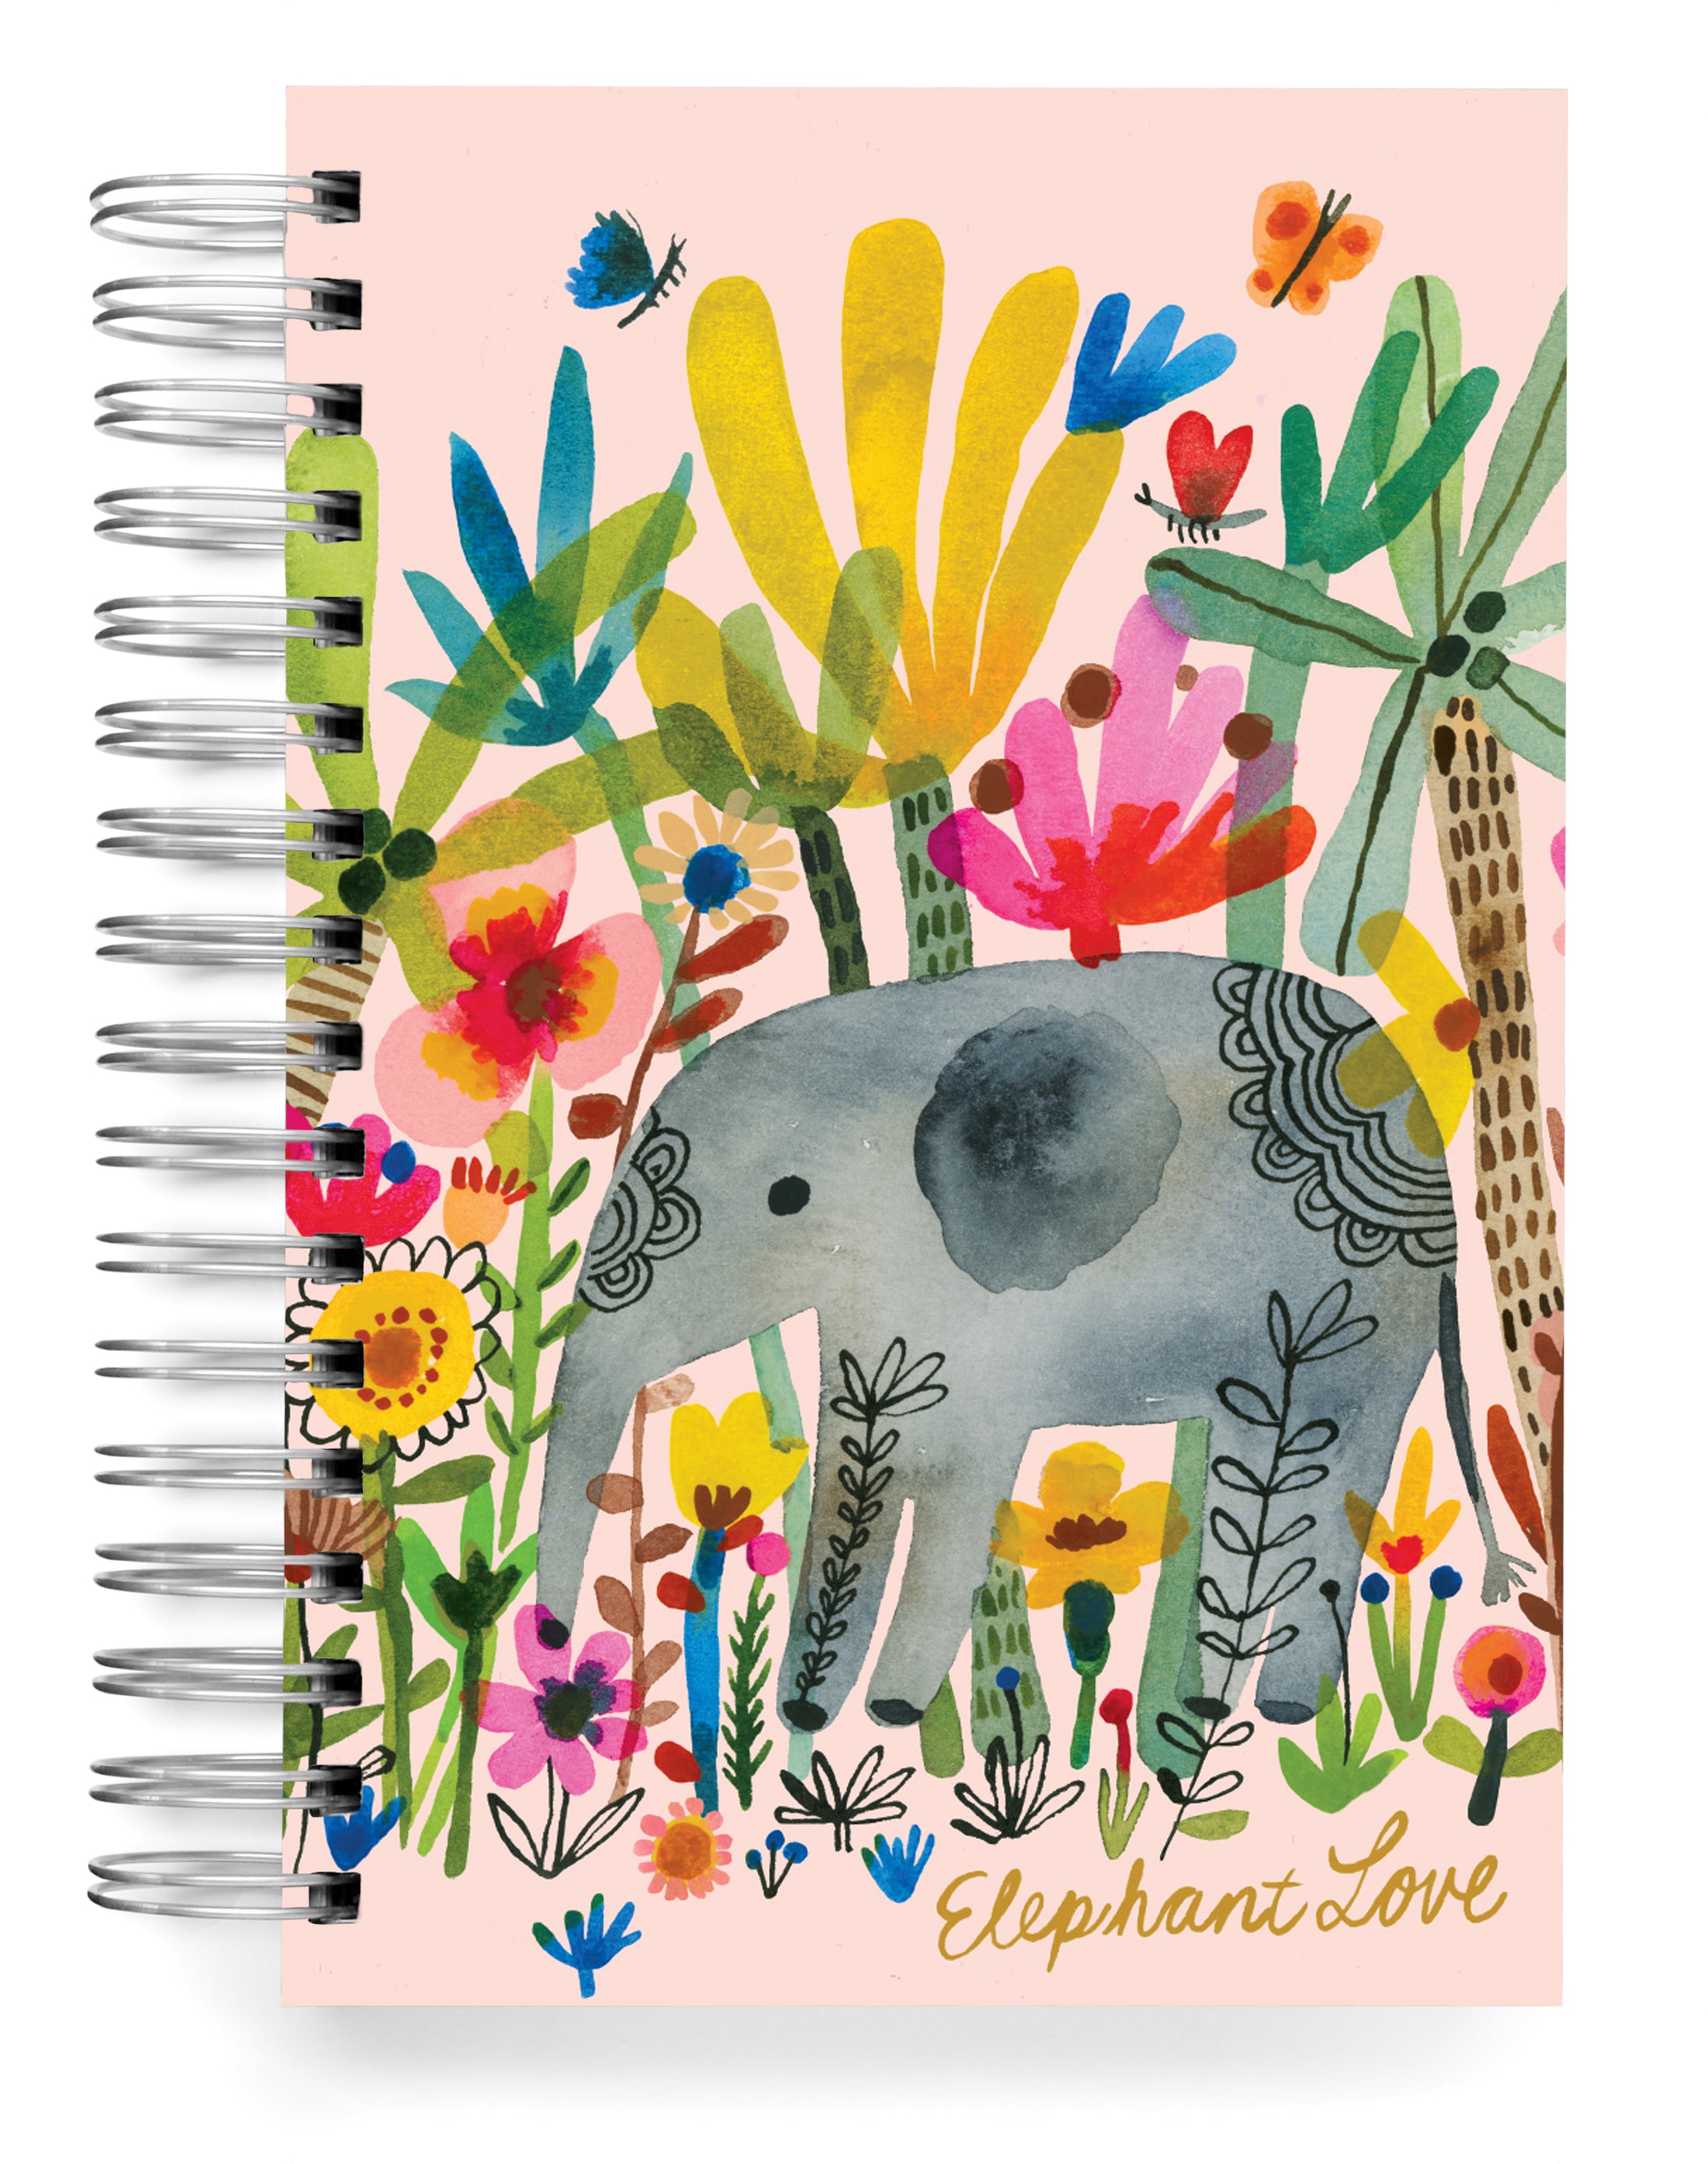 Elephant Love Jumbo Journal and Planner set